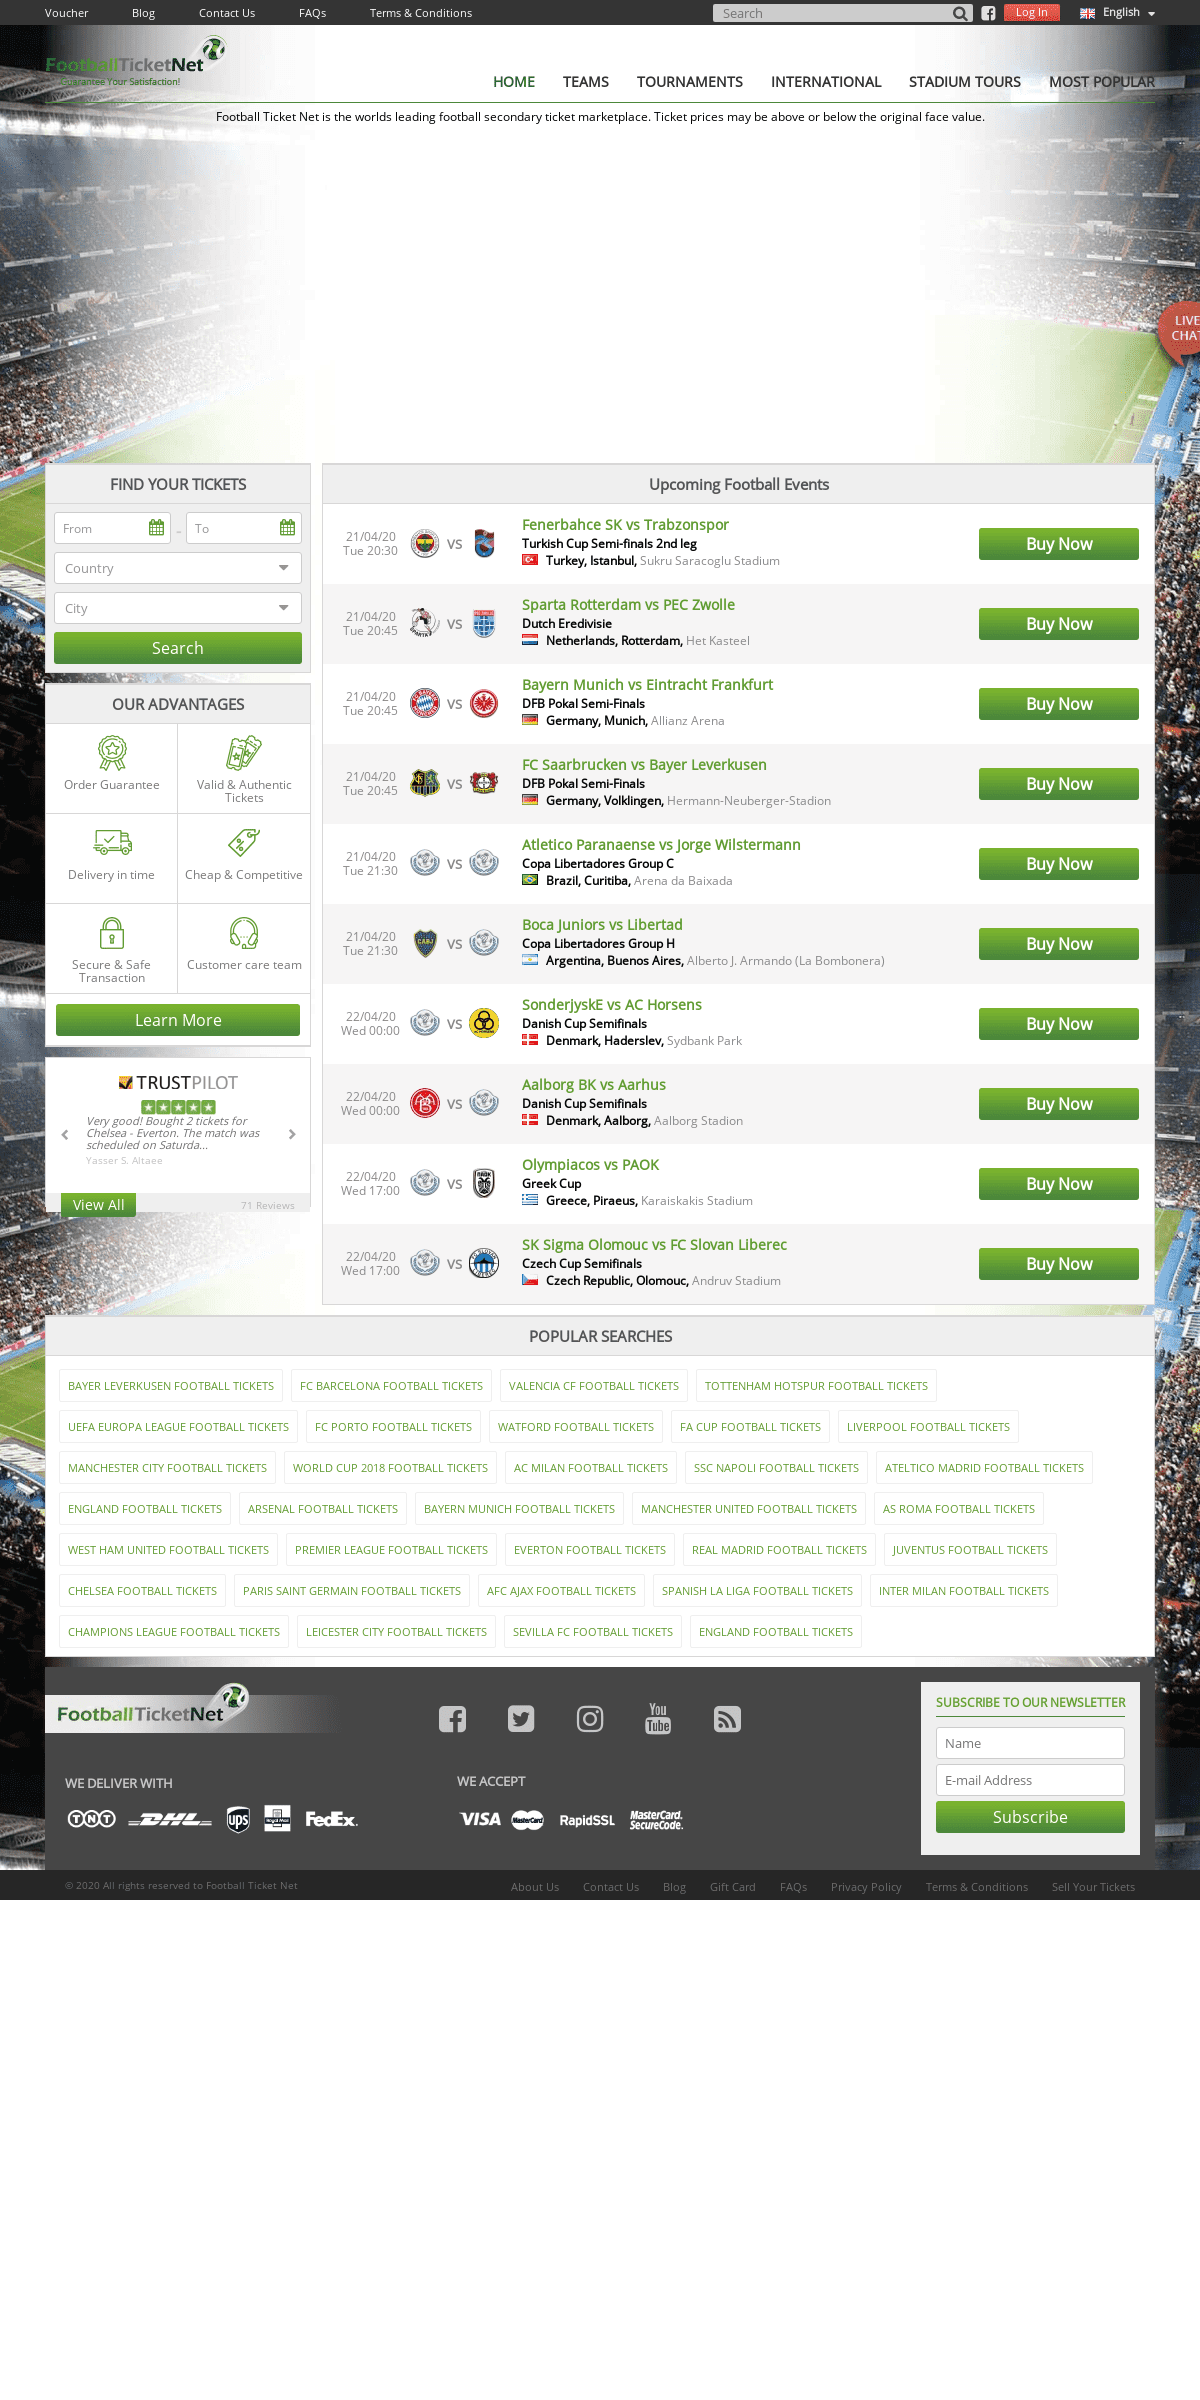 A complete backup of footballticketnet.com